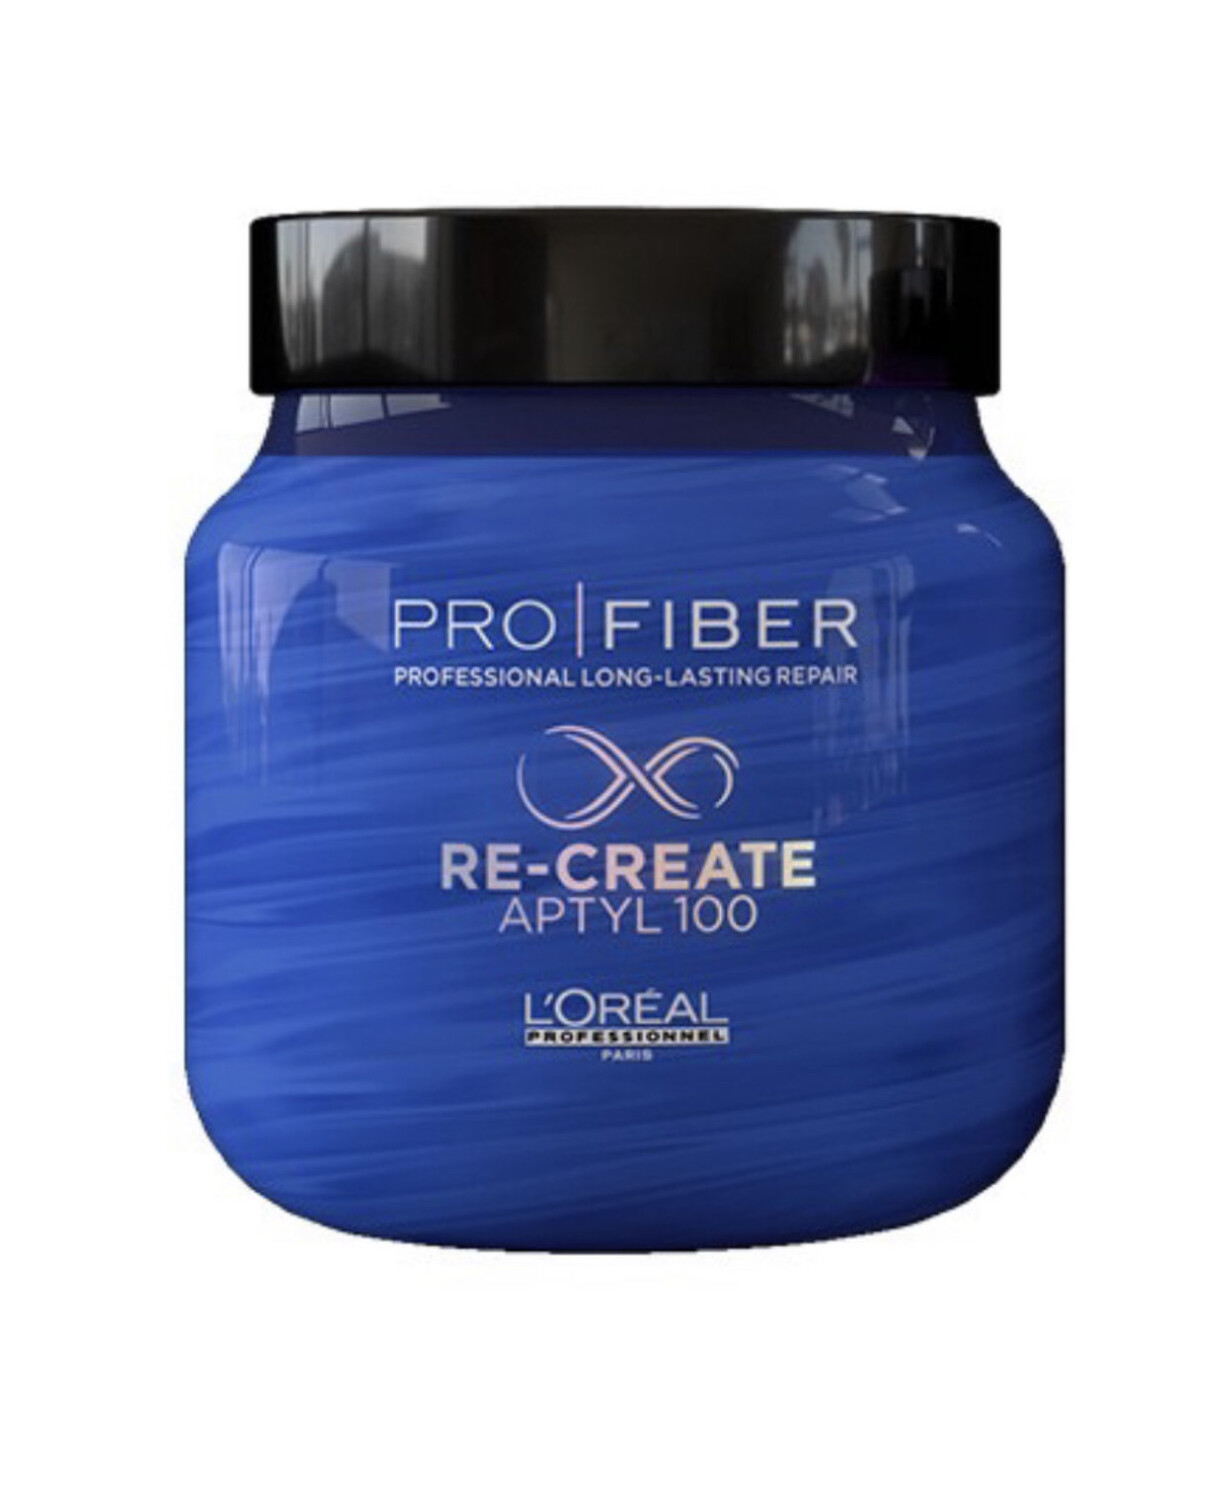 L'Oréal Professionnel Pro Fiber Re-Create Damaged Hair Treatment 
L'ORÉAL Pro Fiber Re-Create Masc 710ml